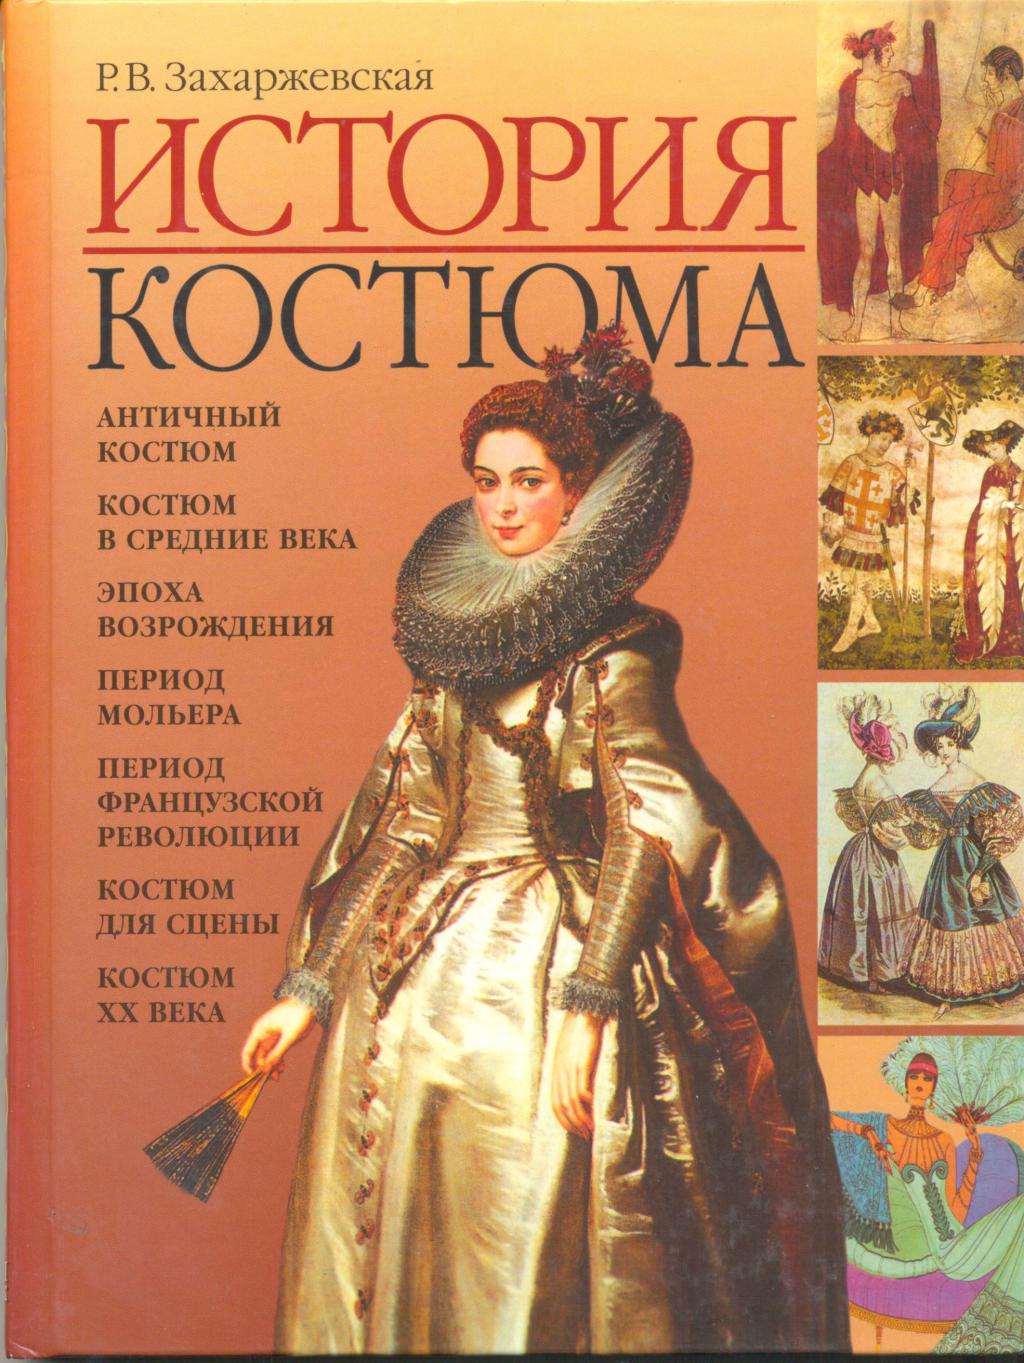 http://book-center.kiev.ua/files/books/2011/562.jpg